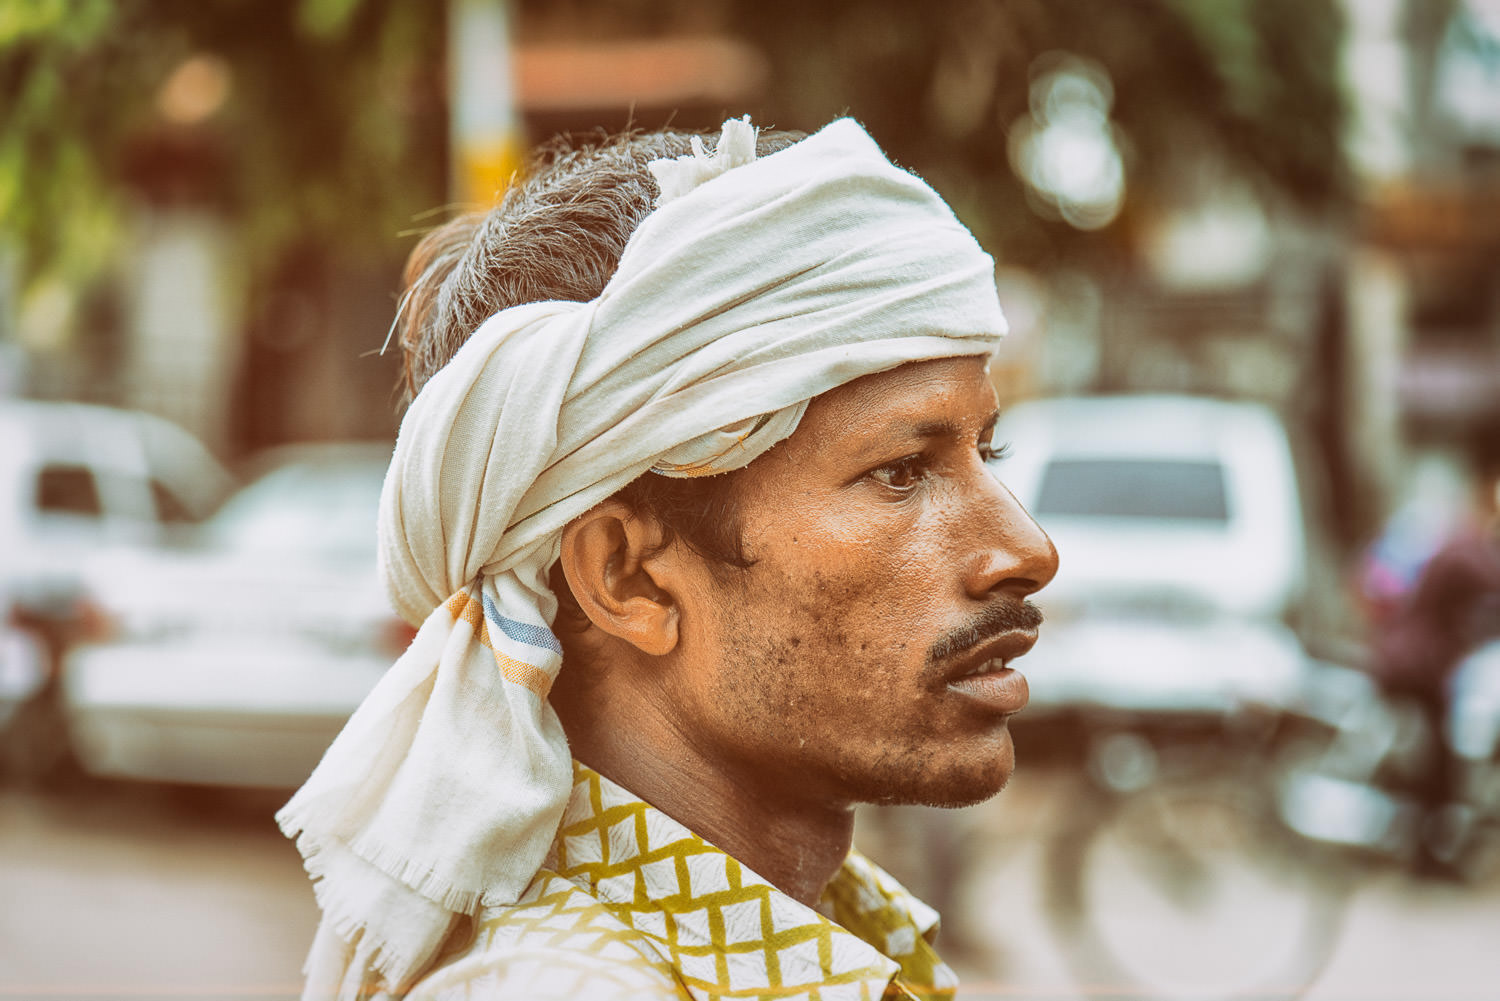 Rickshaw Driver - Asia, Delhi, India, portrait, rickshaw, street, travel